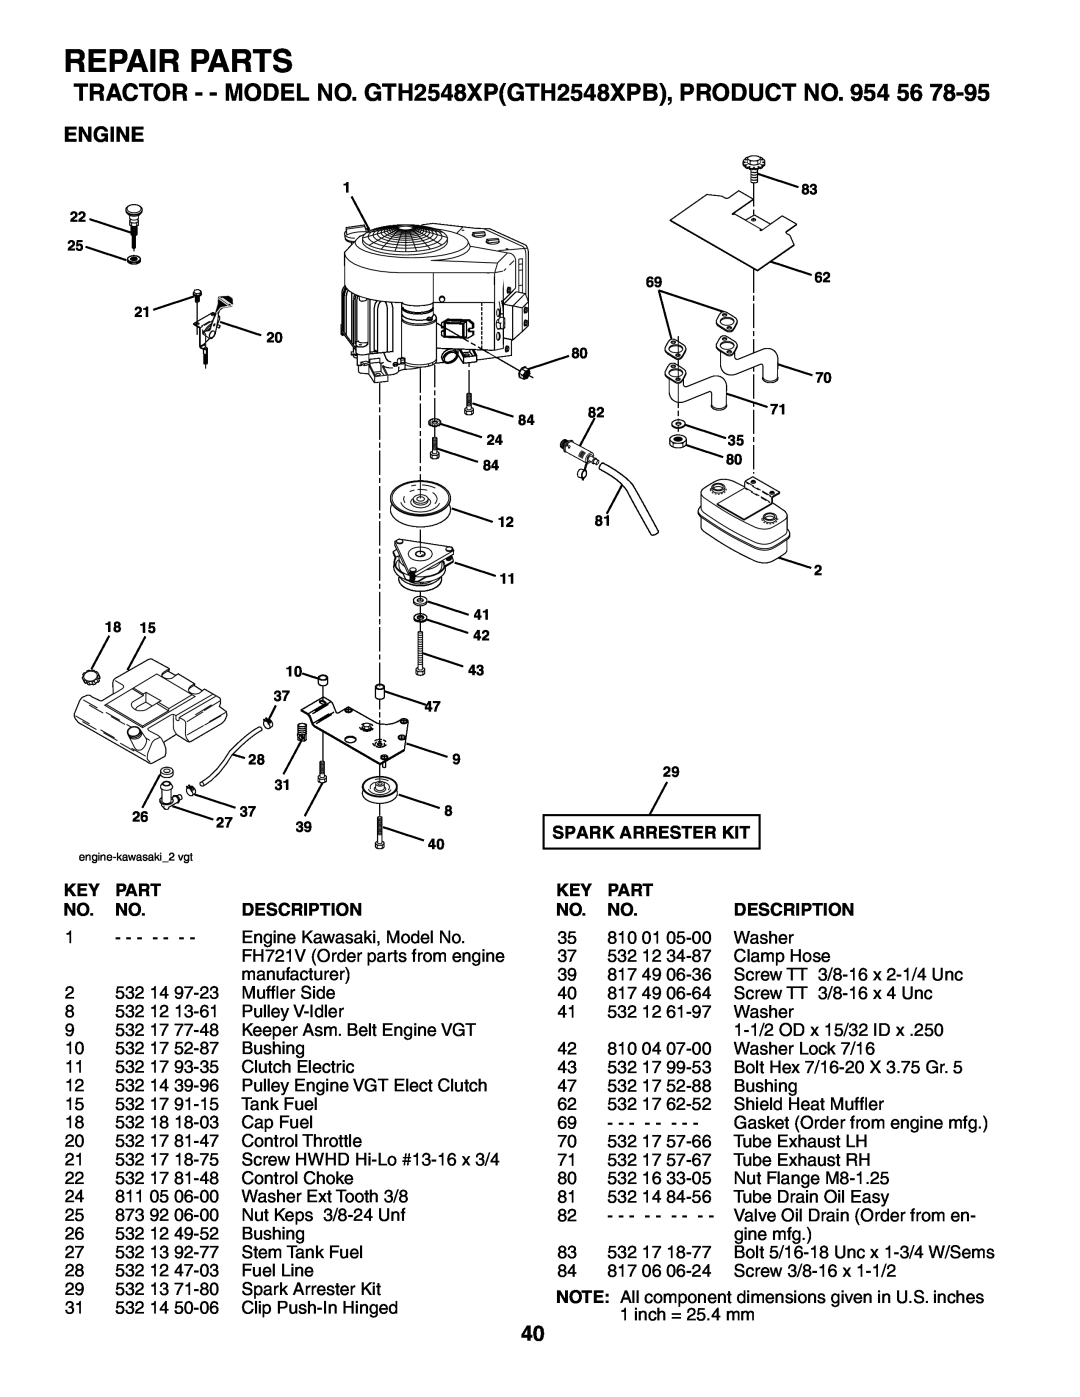 Husqvarna GTH2548XP owner manual Engine, Repair Parts, Spark Arrester Kit 